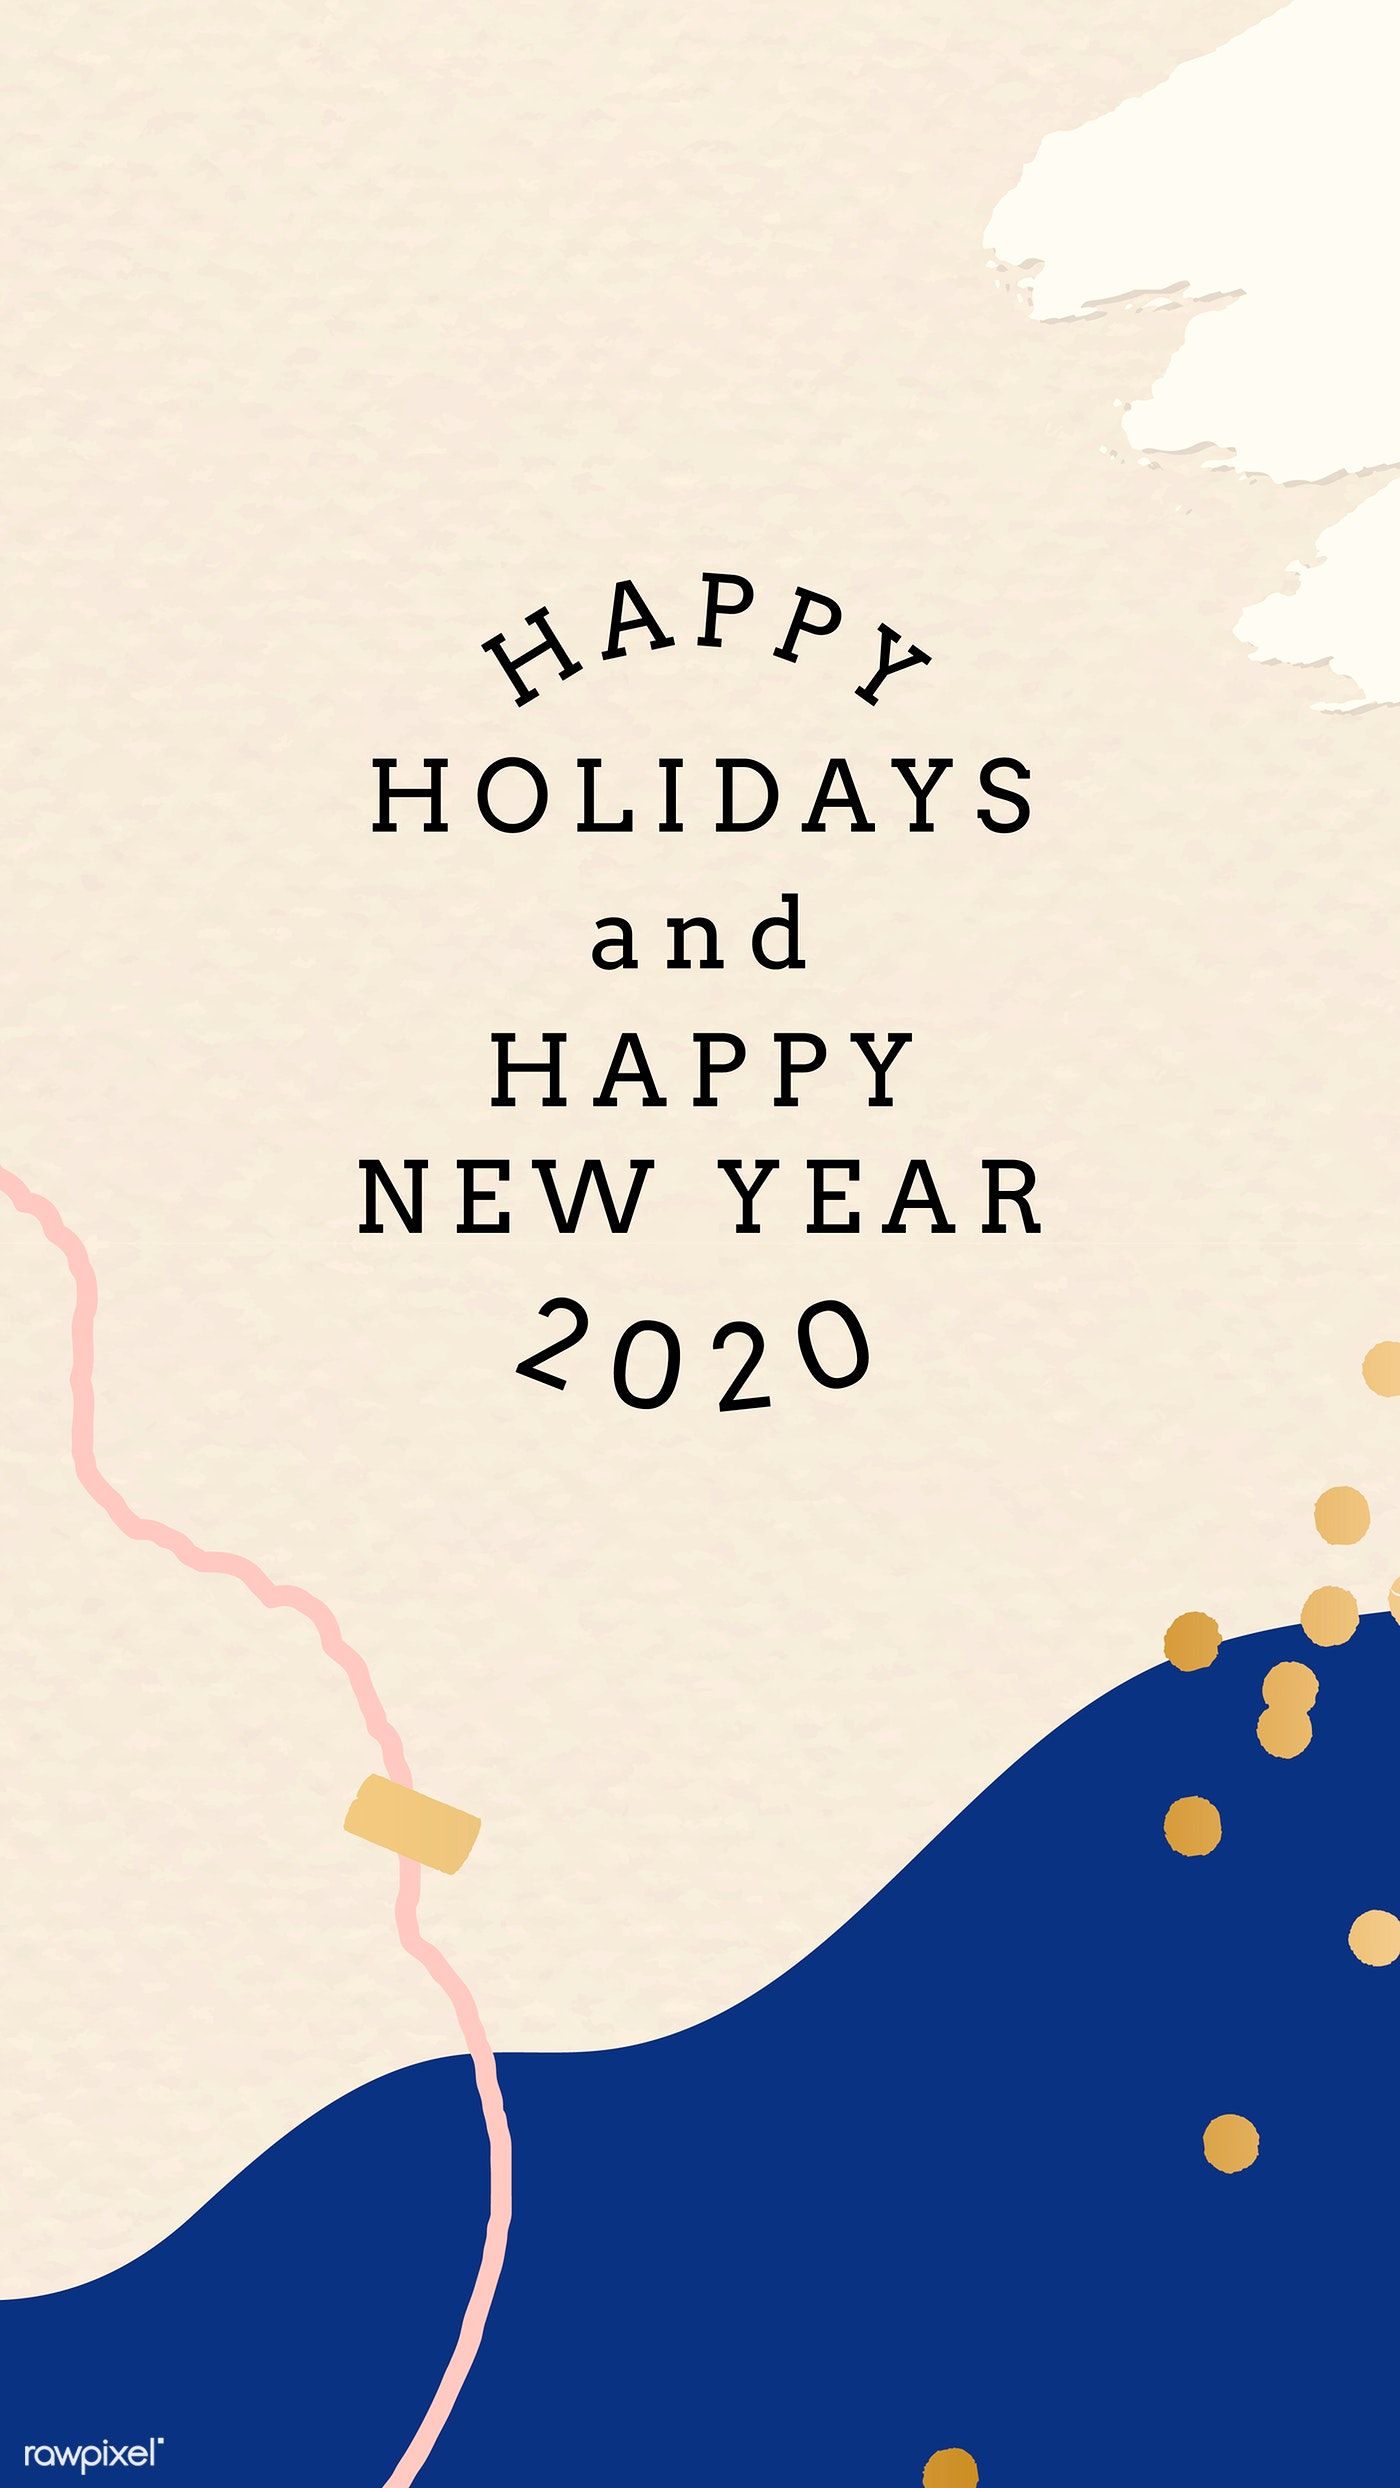 Download premium vector of Happy New Year 2020 Memphis design